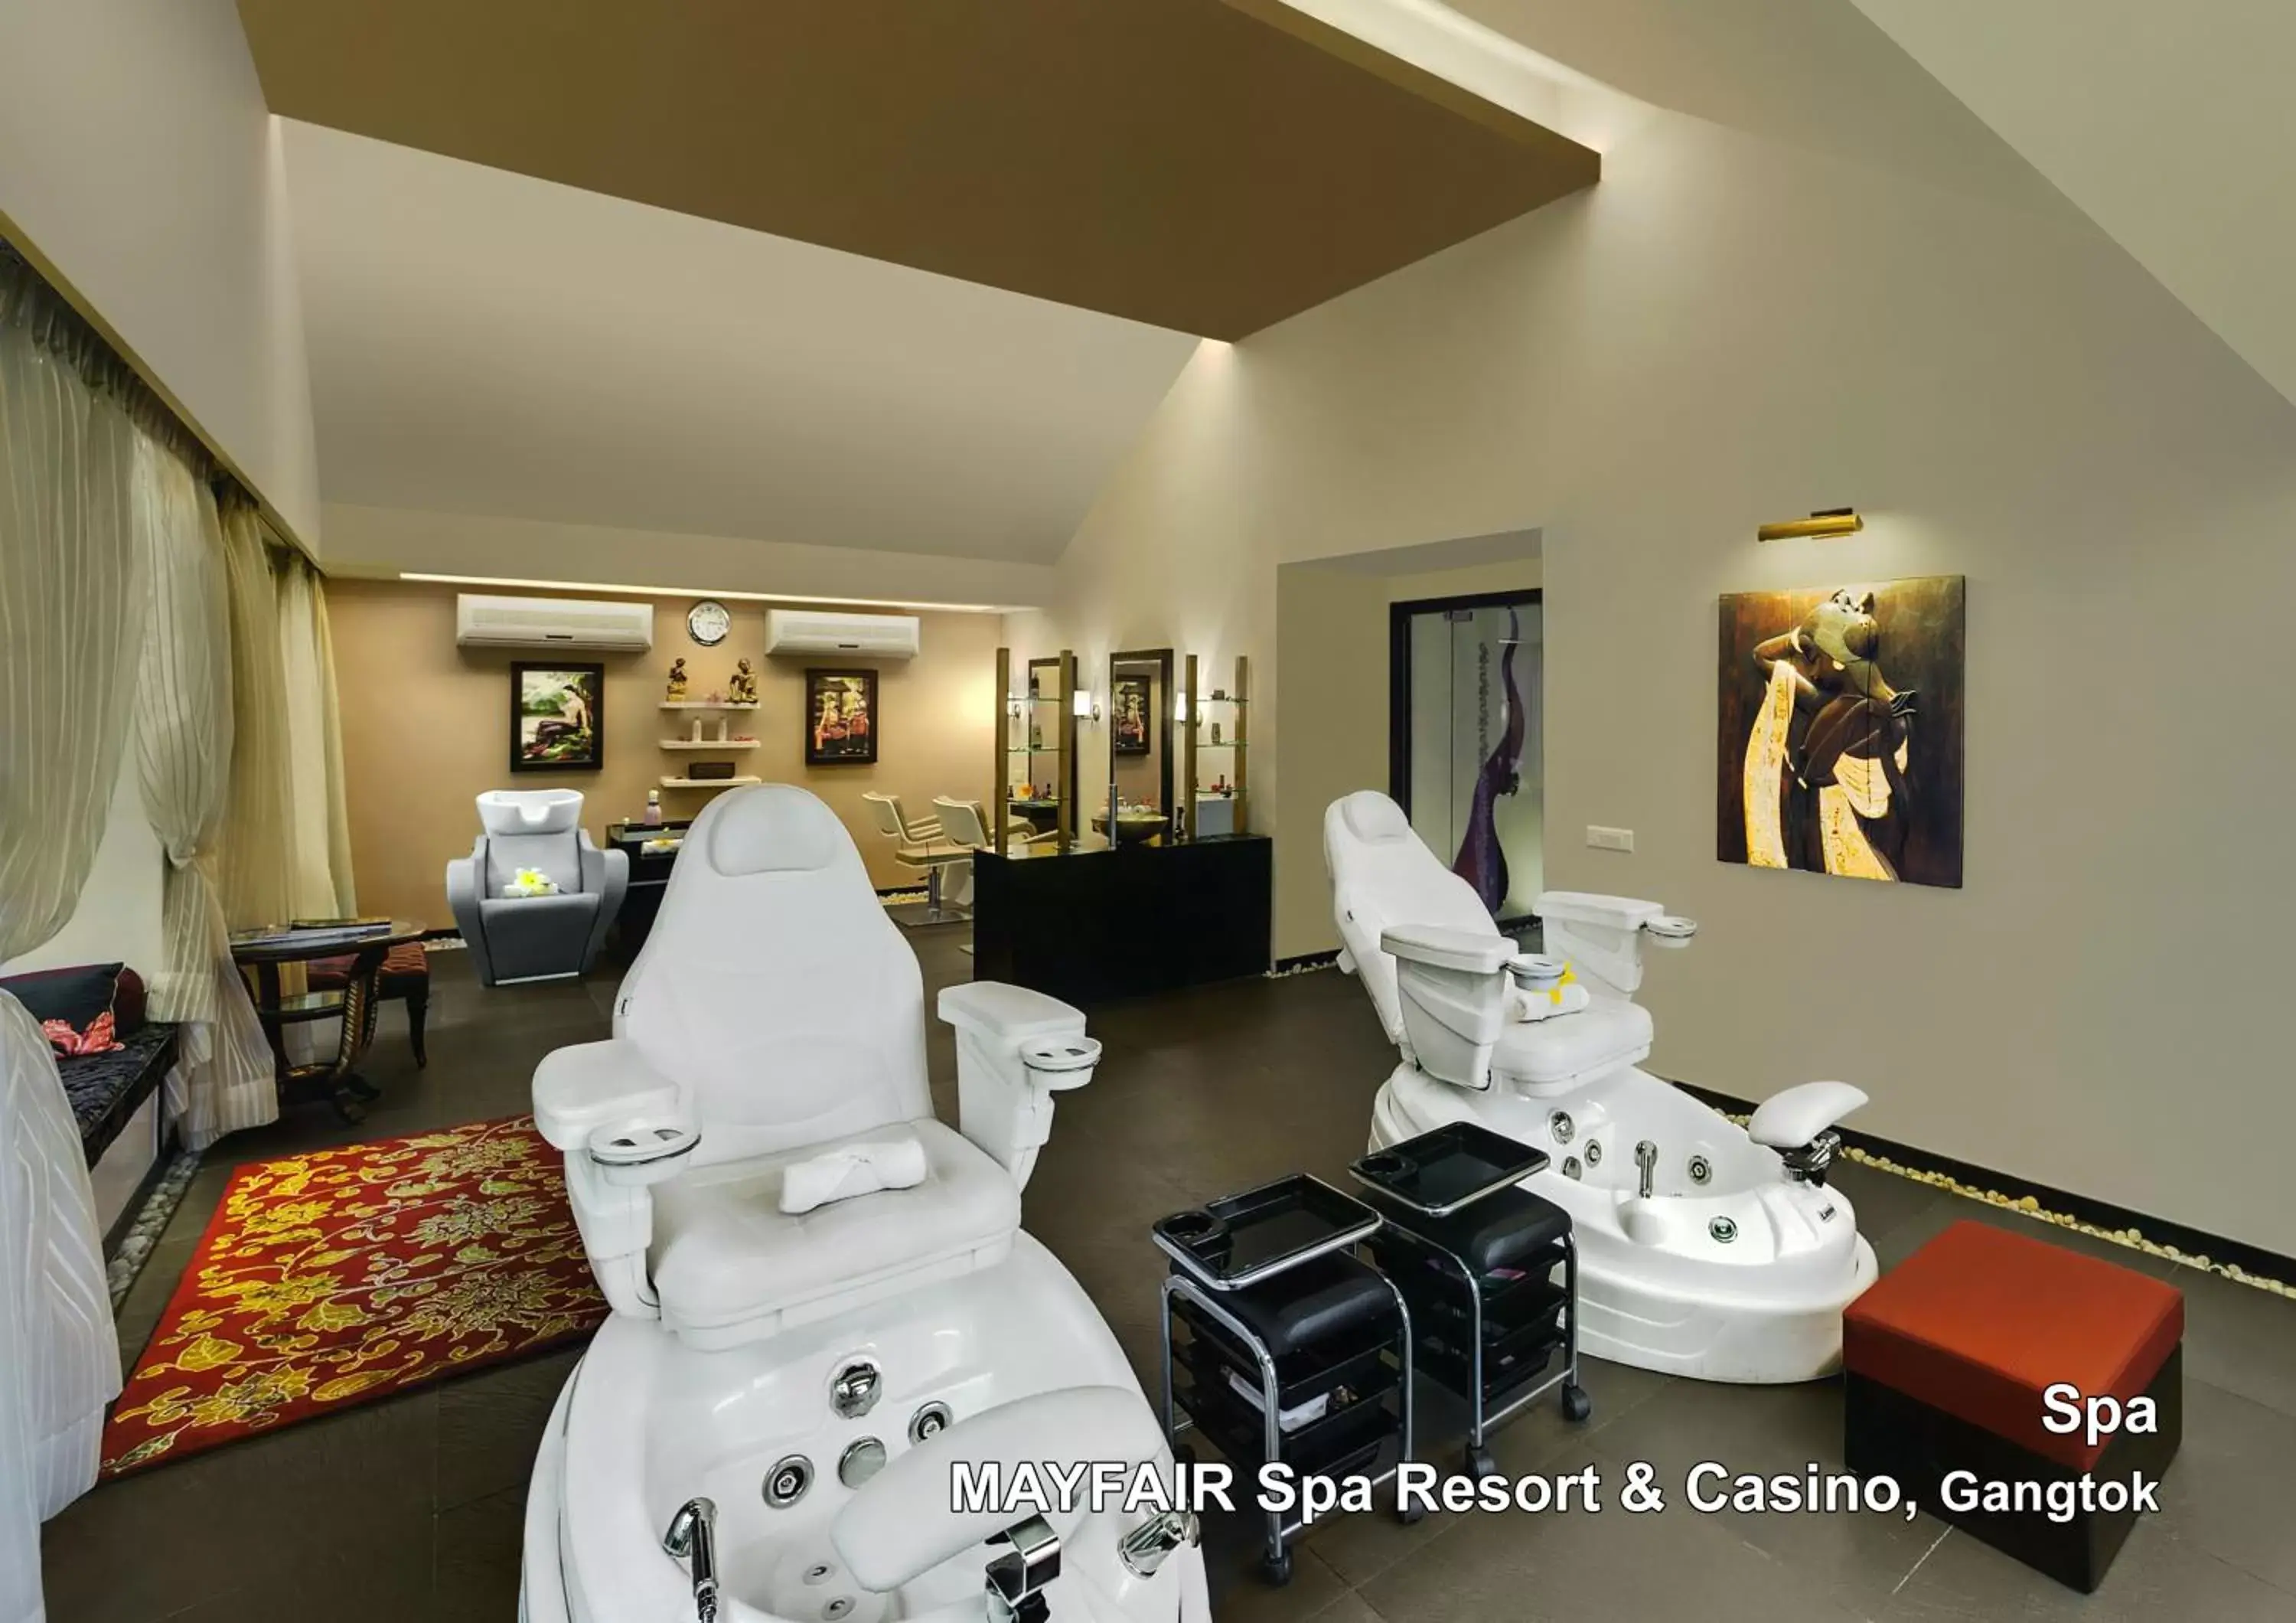 Spa and wellness centre/facilities, Bathroom in Mayfair Spa Resort & Casino